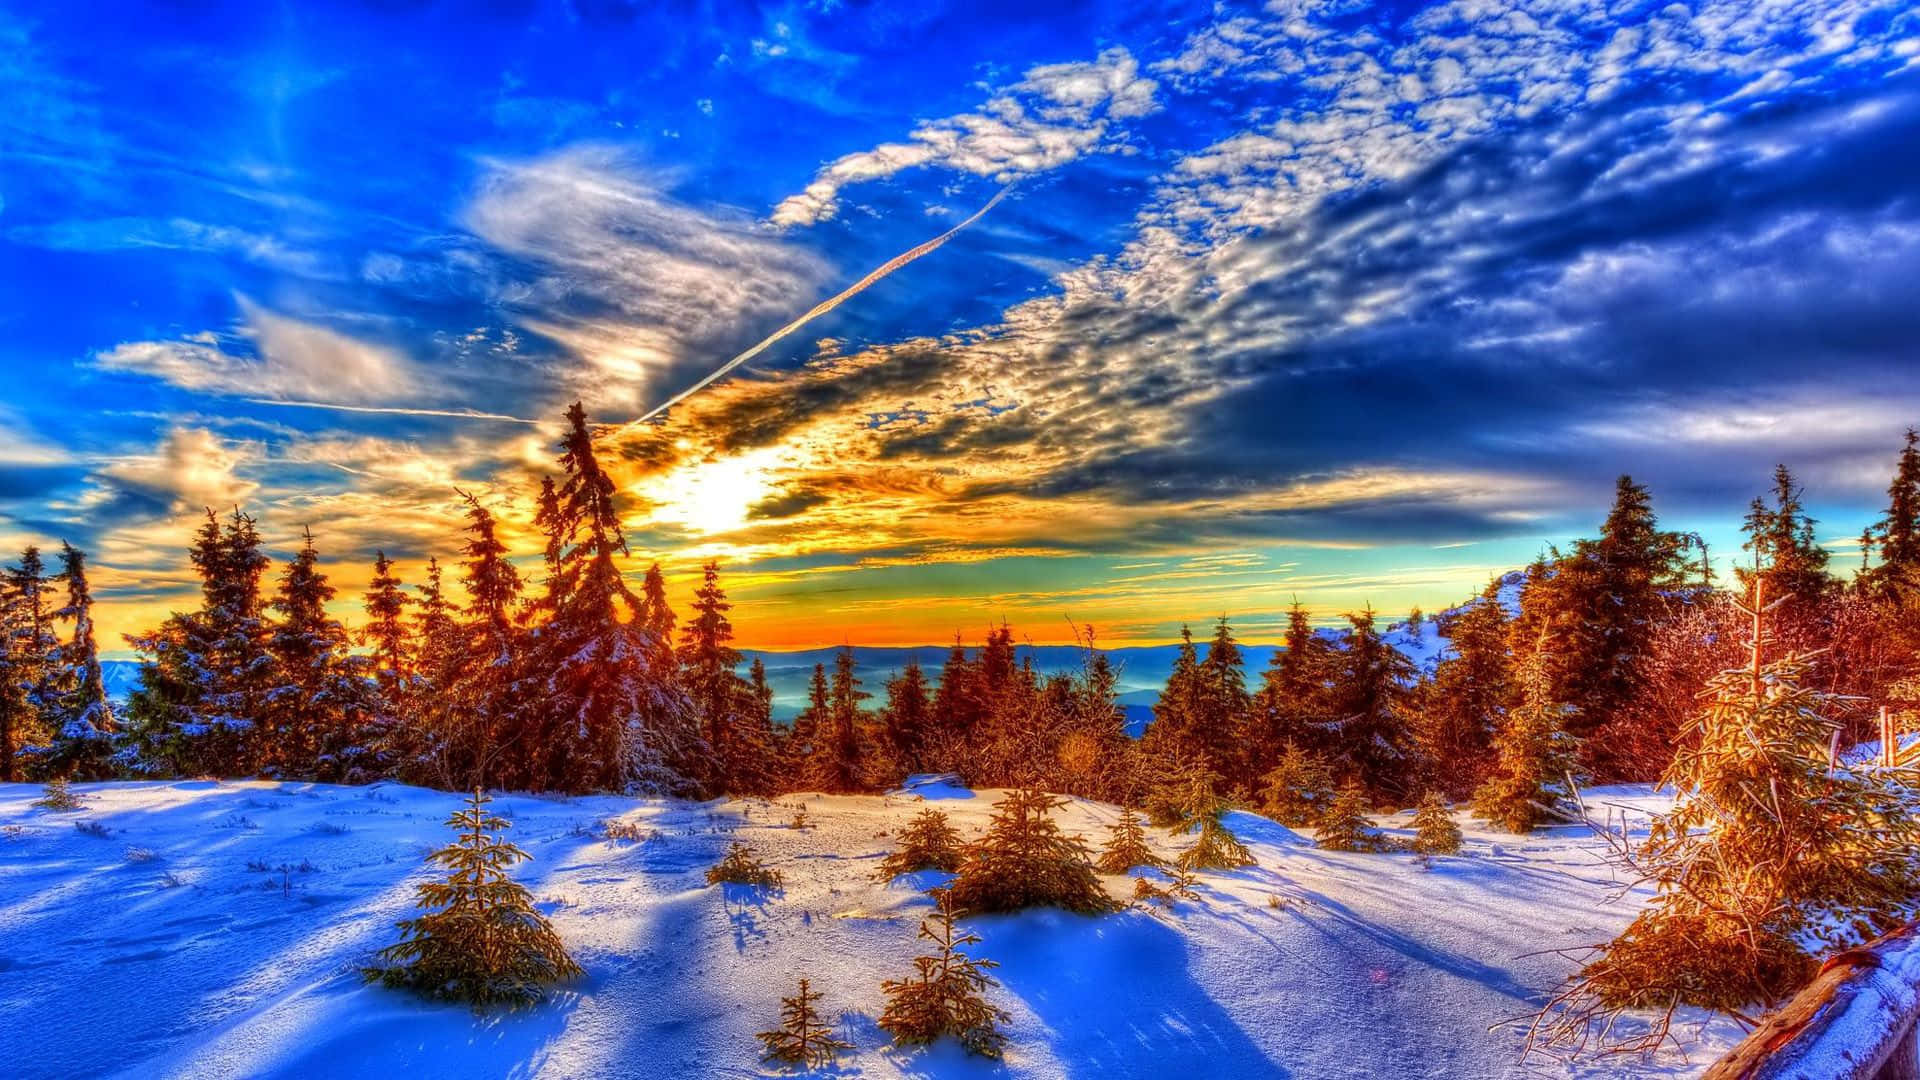 Enjoy the Splendor of a Beautiful Winter Scene